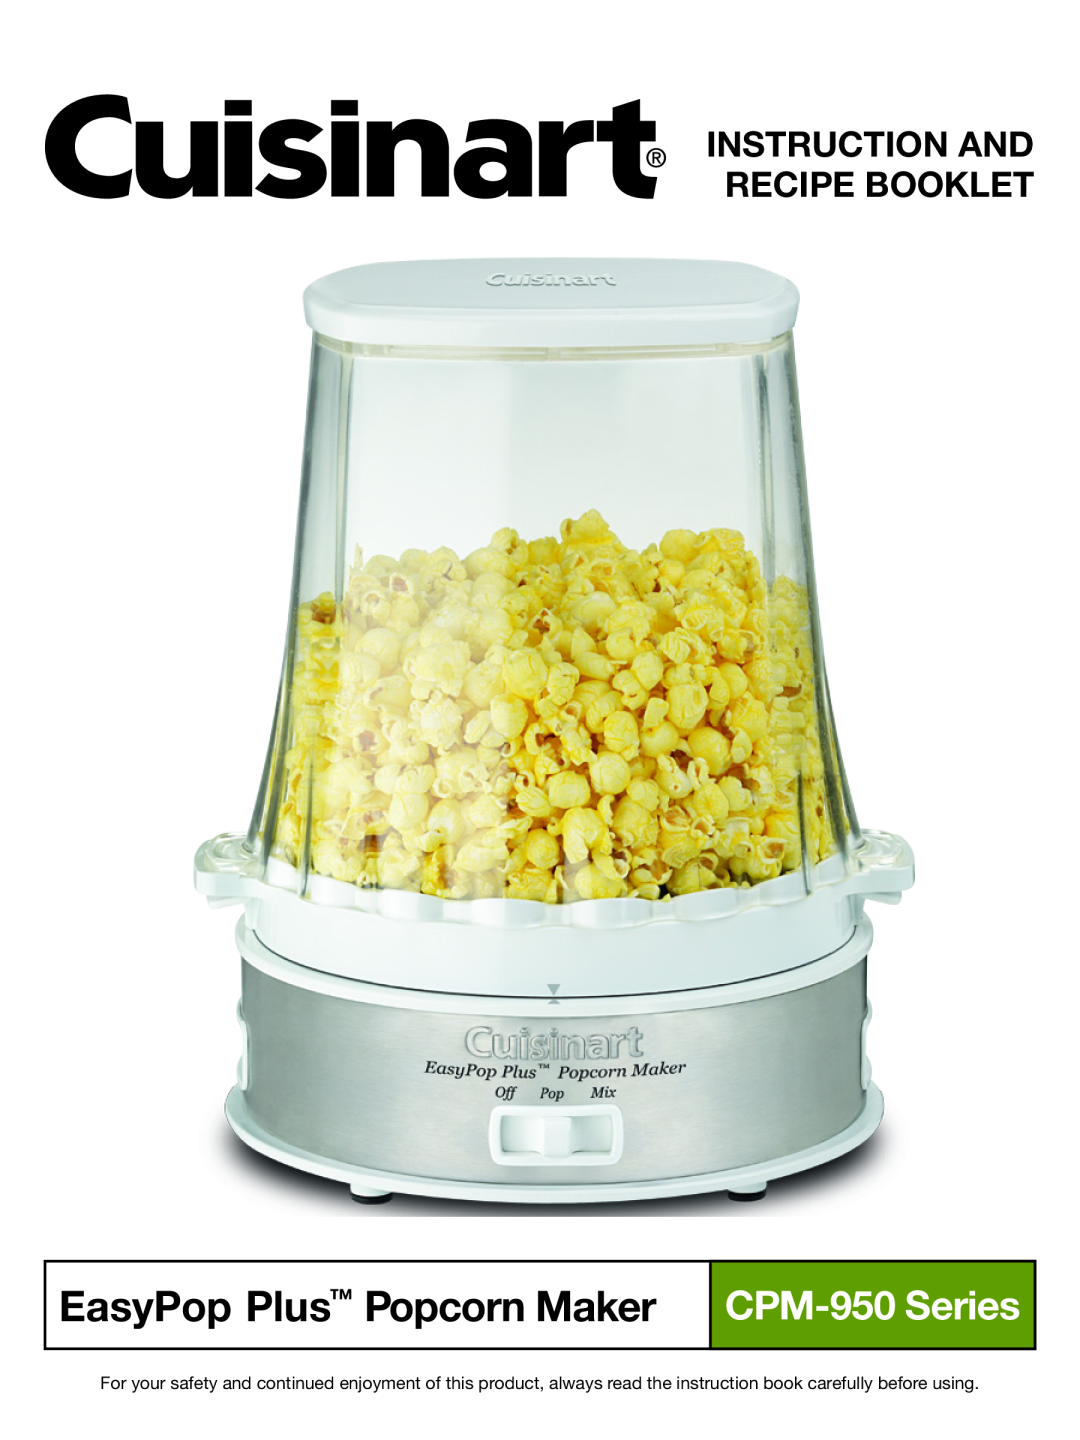 Cuisinart manual Instruction And Recipe Booklet, EasyPop Plus Popcorn Maker, CPM-950 Series 